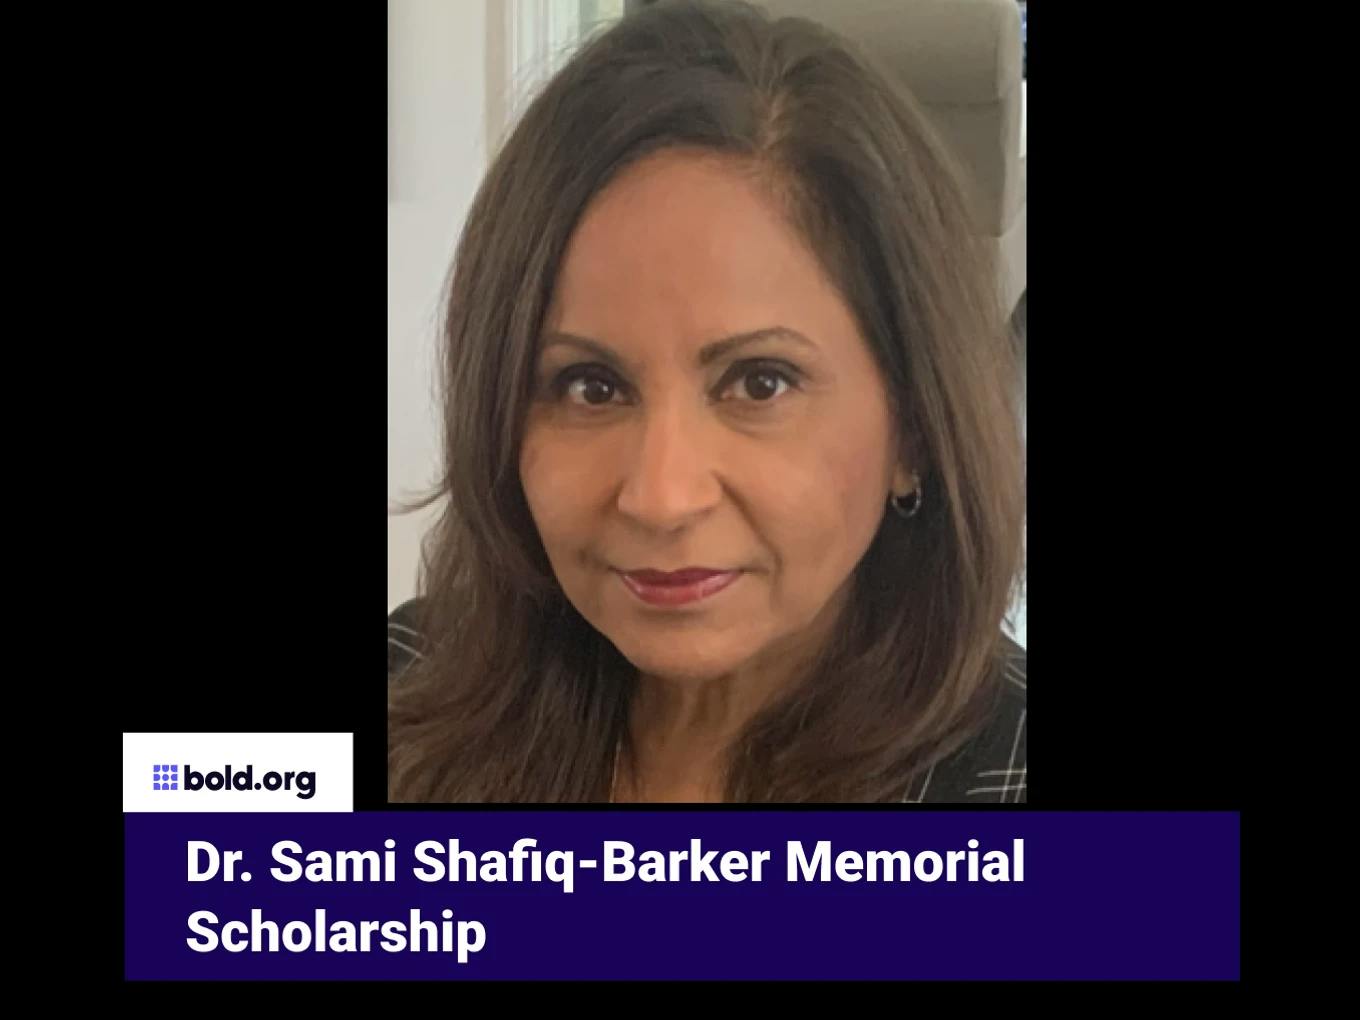 Dr. Sami Shafiq-Barker Memorial Scholarship